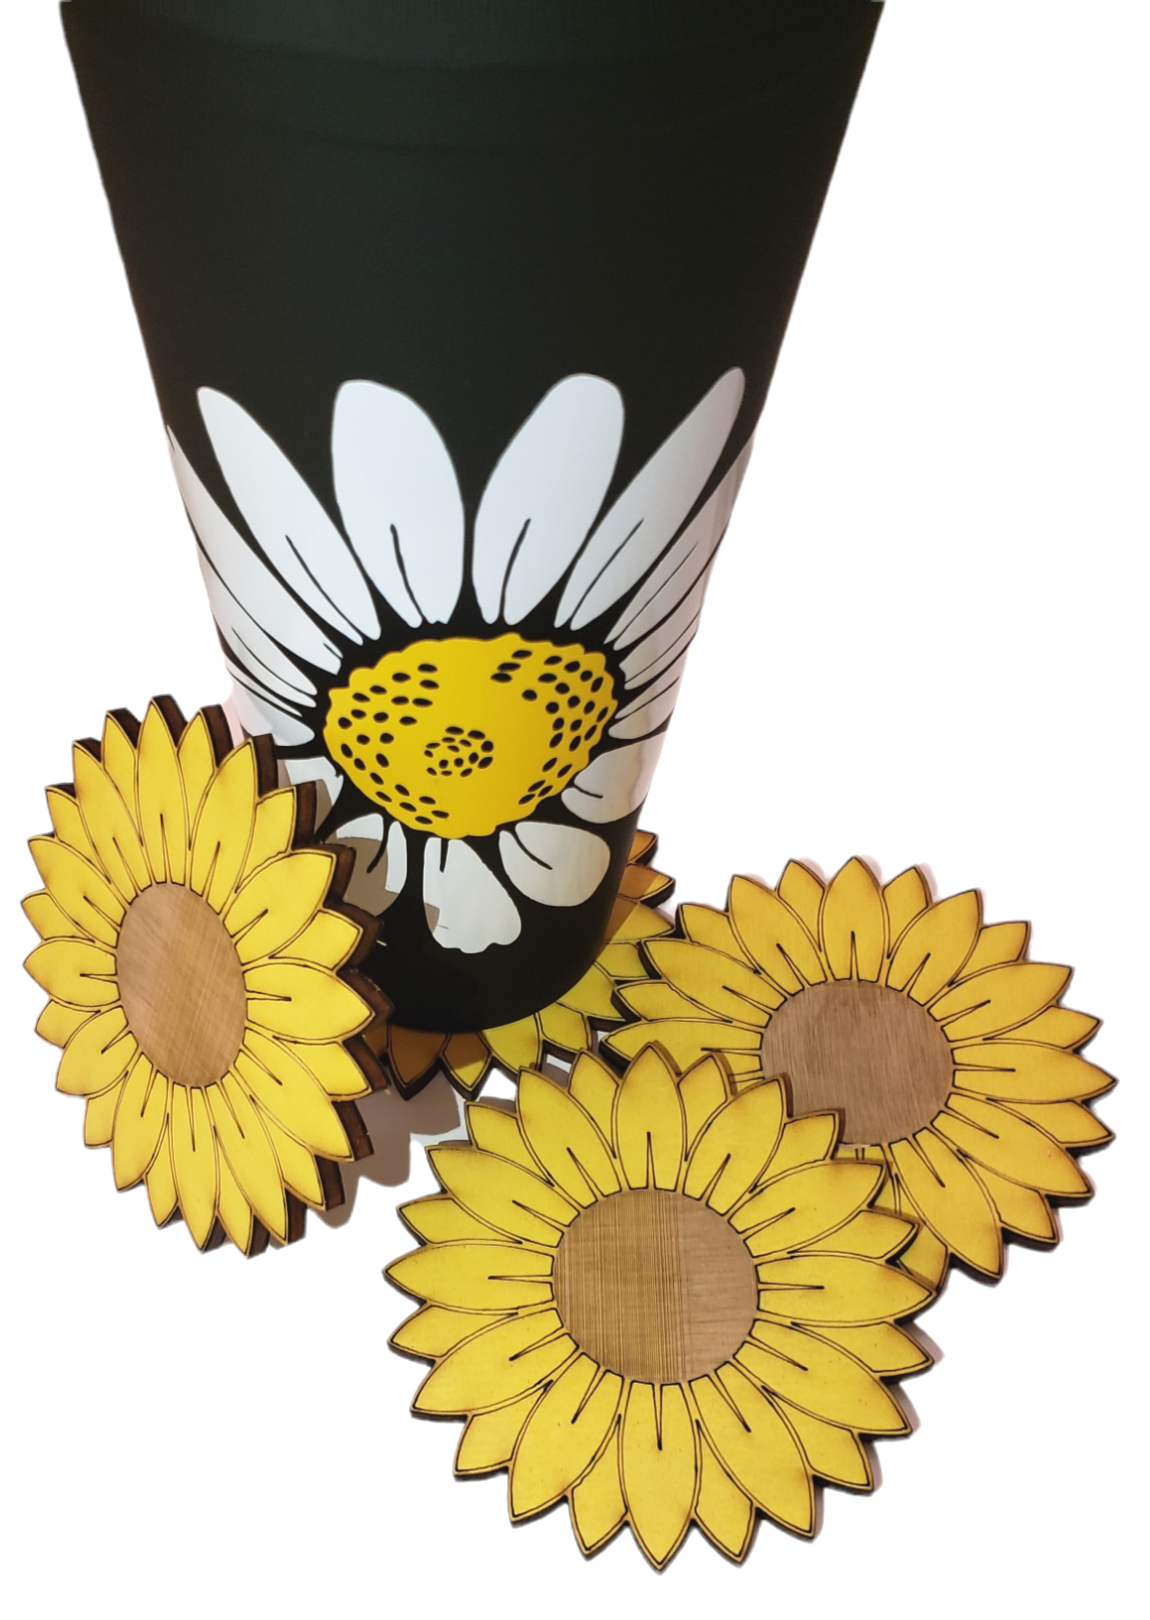 Set of 4 Handmade Farmhouse Inspired Wood Sunflower Coasters